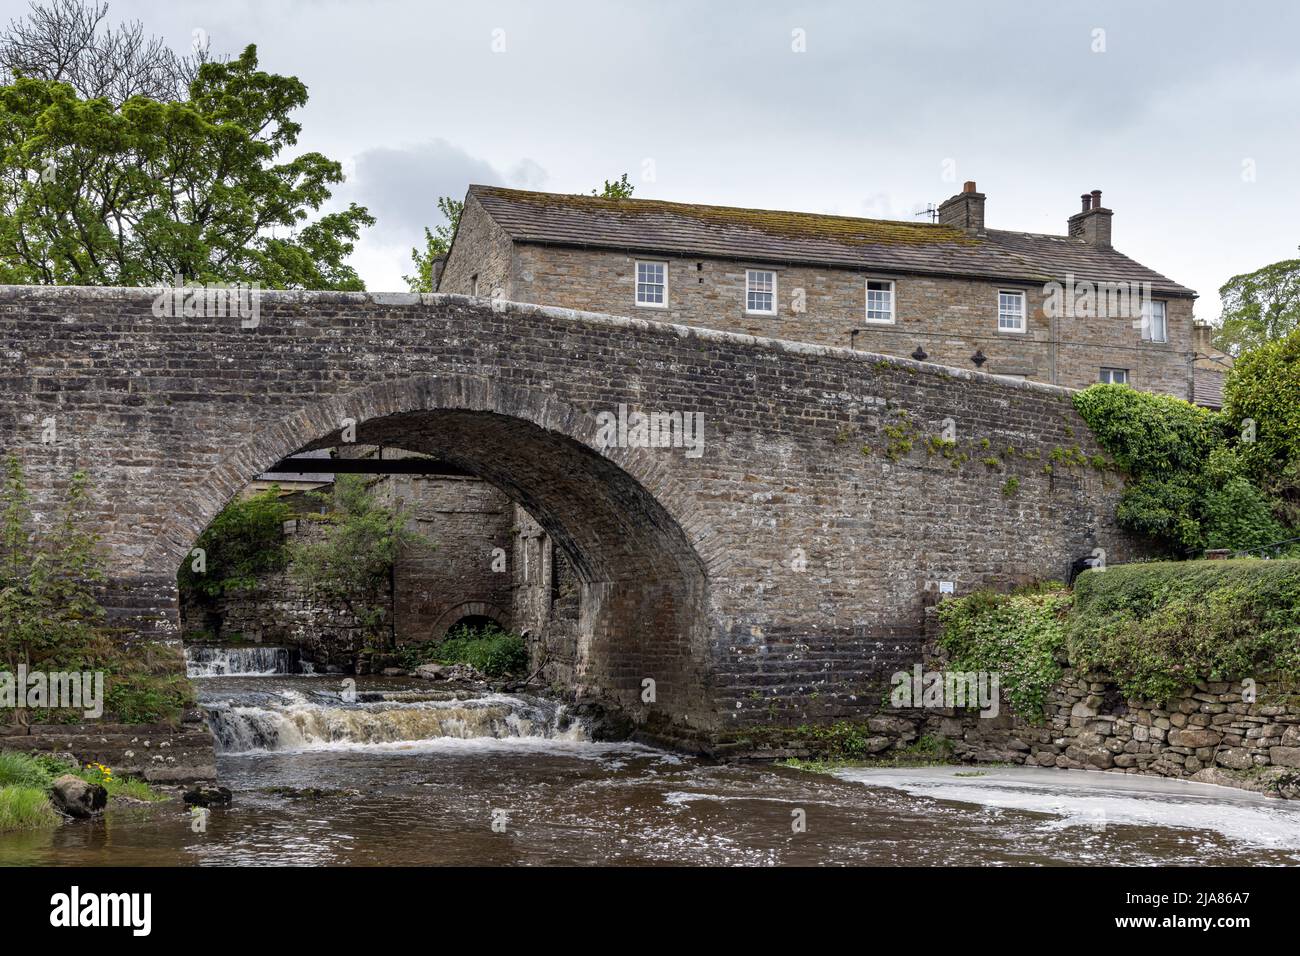 The picturesque stone bridge over the River Bain in Bainbridge, Yorkshire Dales, England Stock Photo